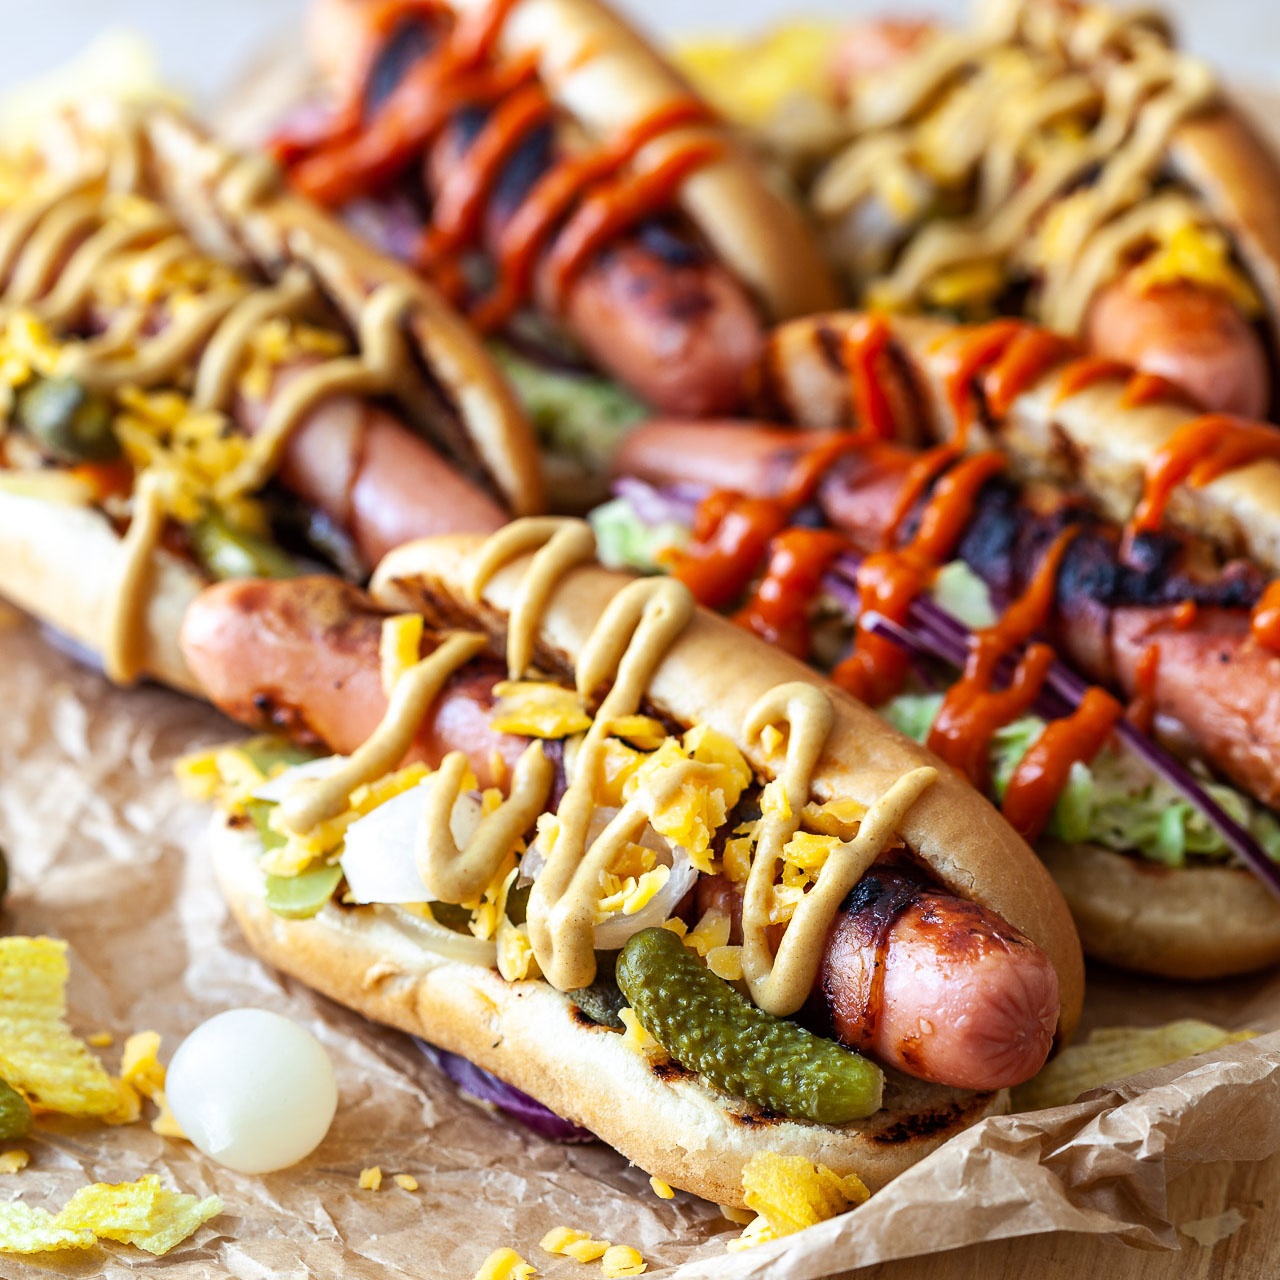 Hot dog sendvič po receptu Vibrant Plate